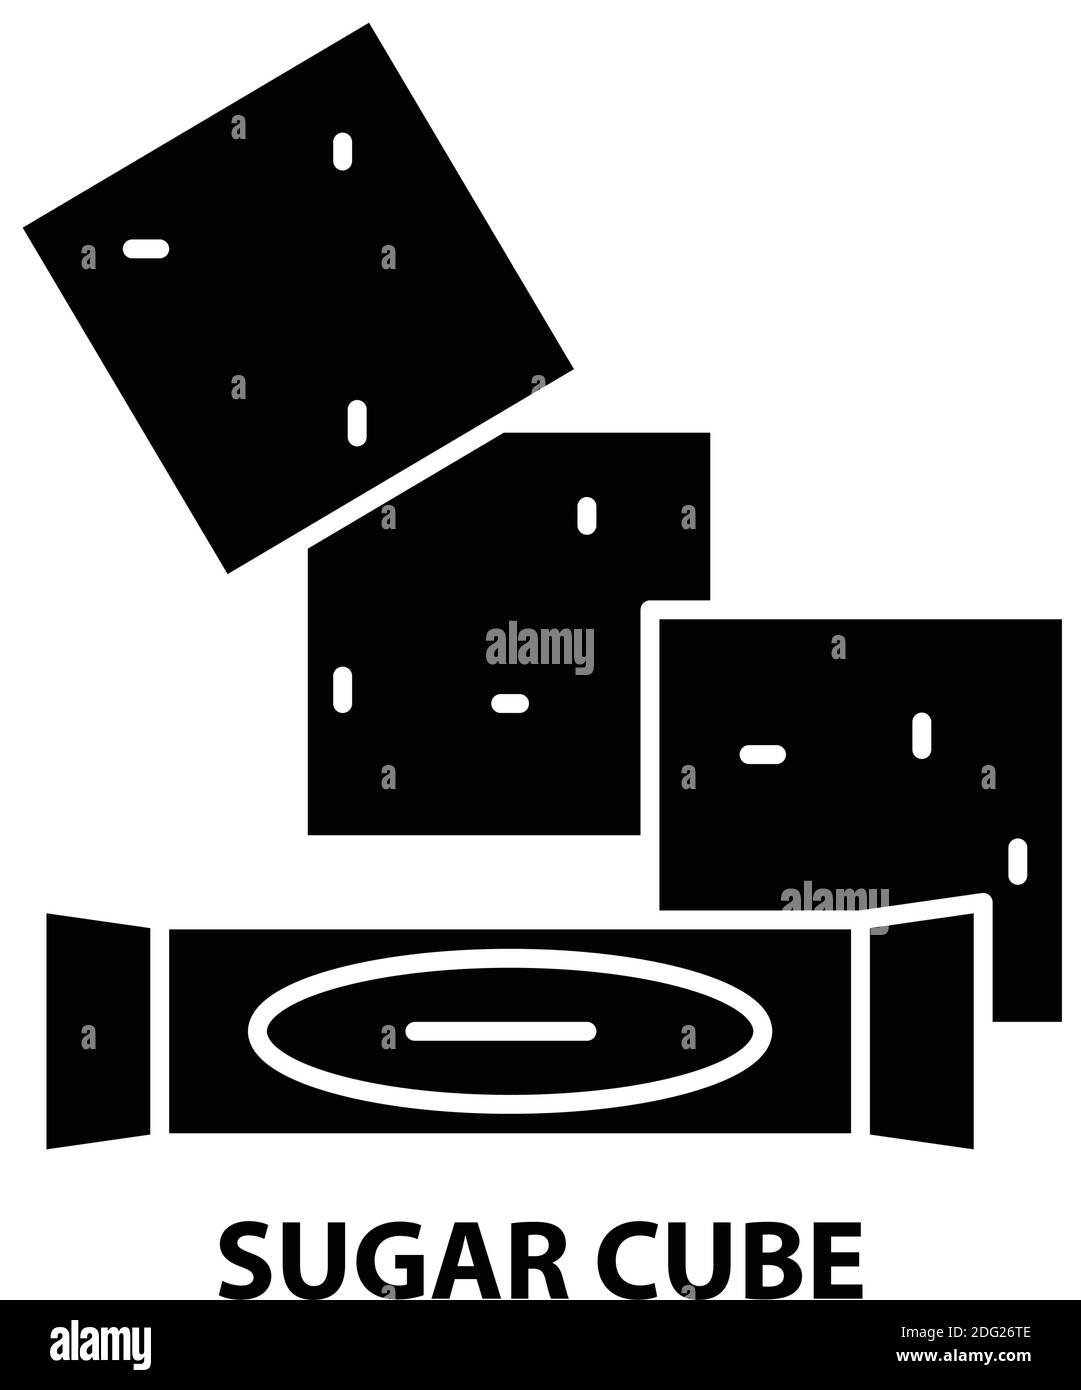 sugar cube icon, black vector sign with editable strokes, concept illustration Stock Vector